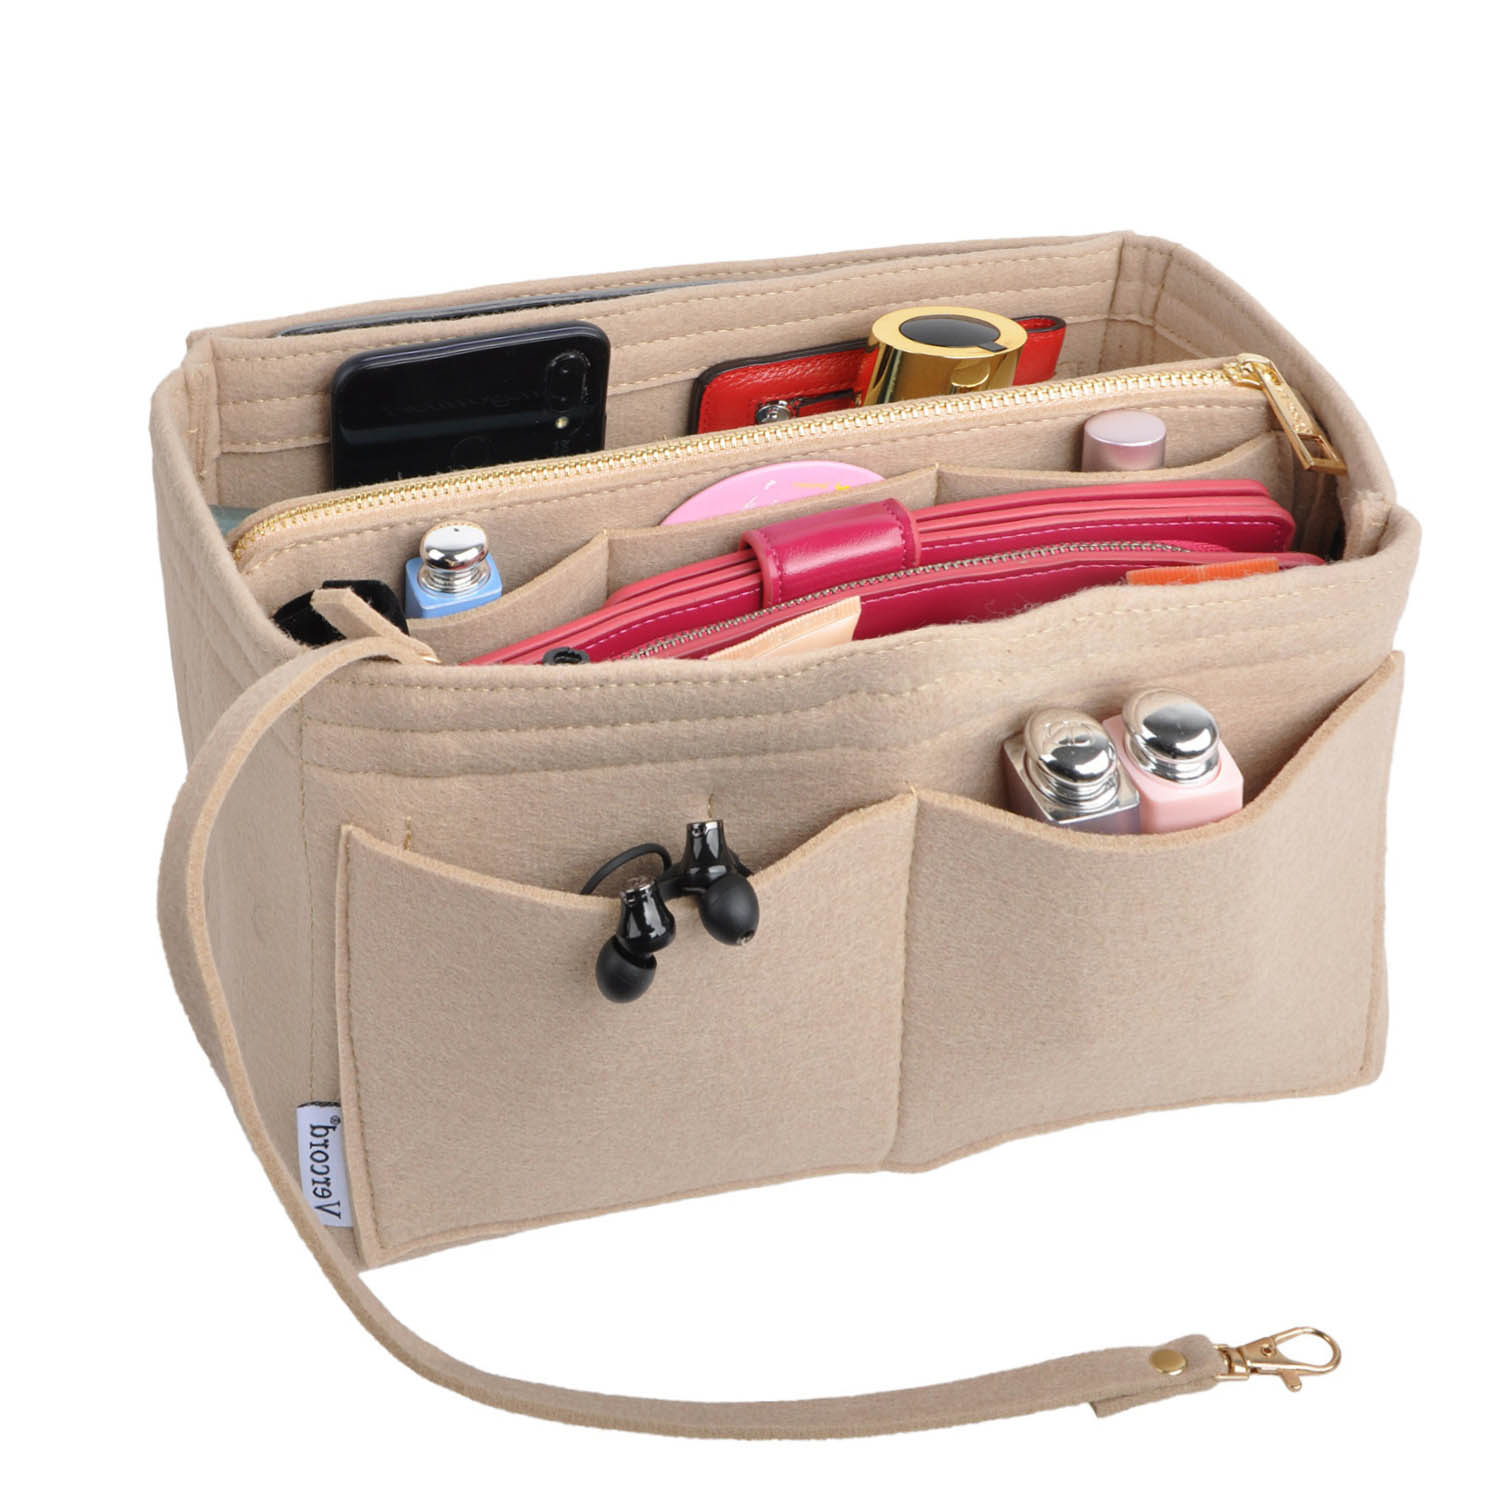 Only Sale Inner Bag】Bag Organizer Insert For Lv Papillon Trunk Organiser  Divider Shaper Protector Compartment - AliExpress